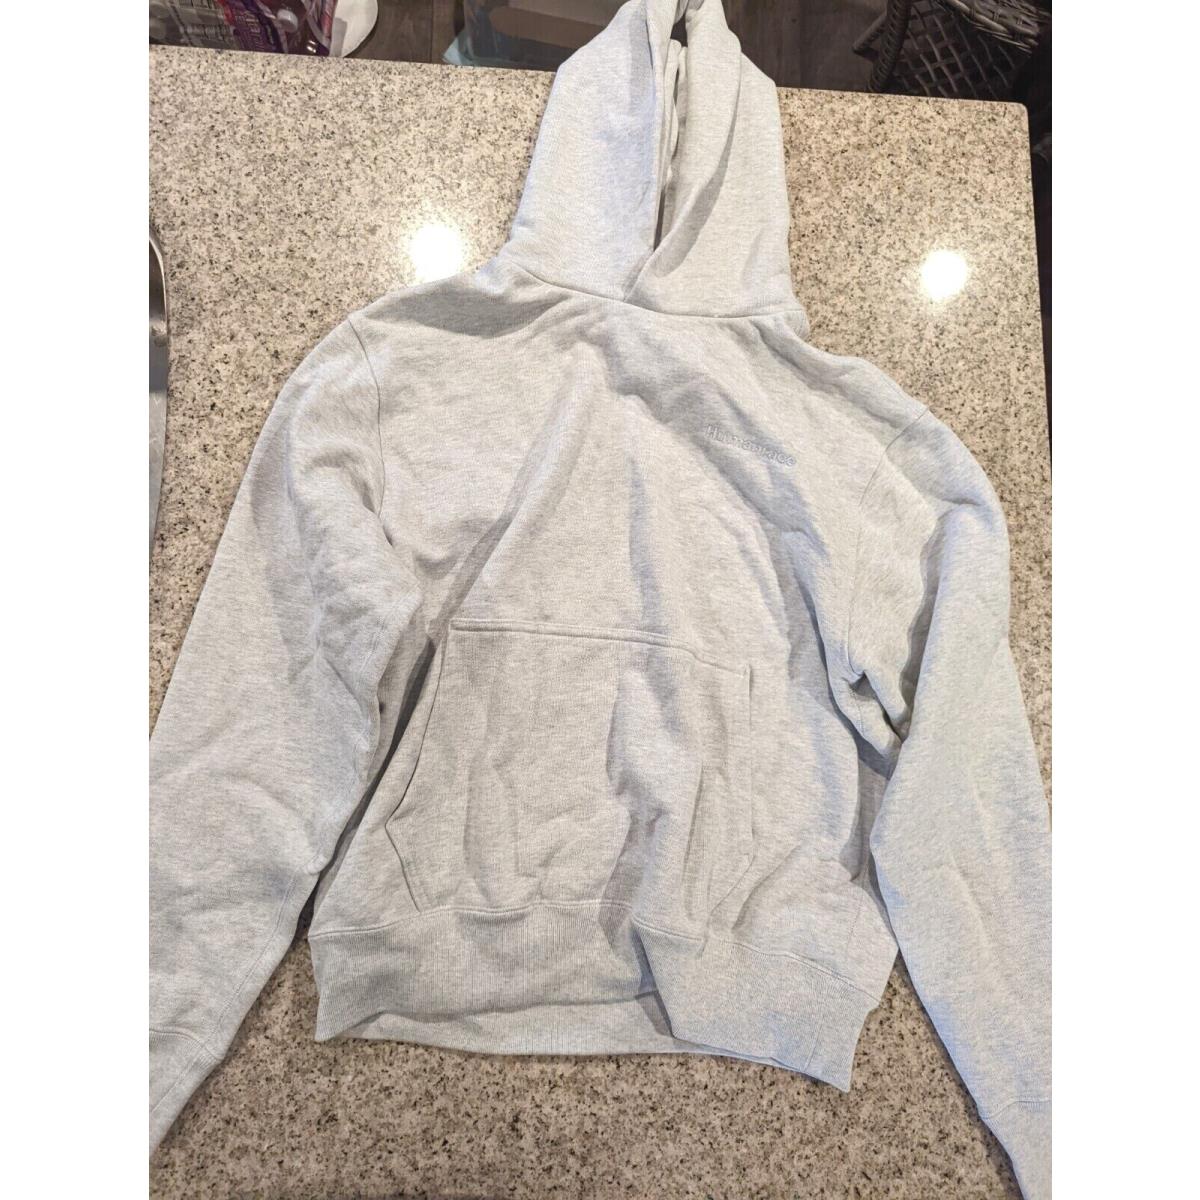 Adidas x Pharrell Williams Unisex Basics Hooded Sweatshirt Light Gray Heather M